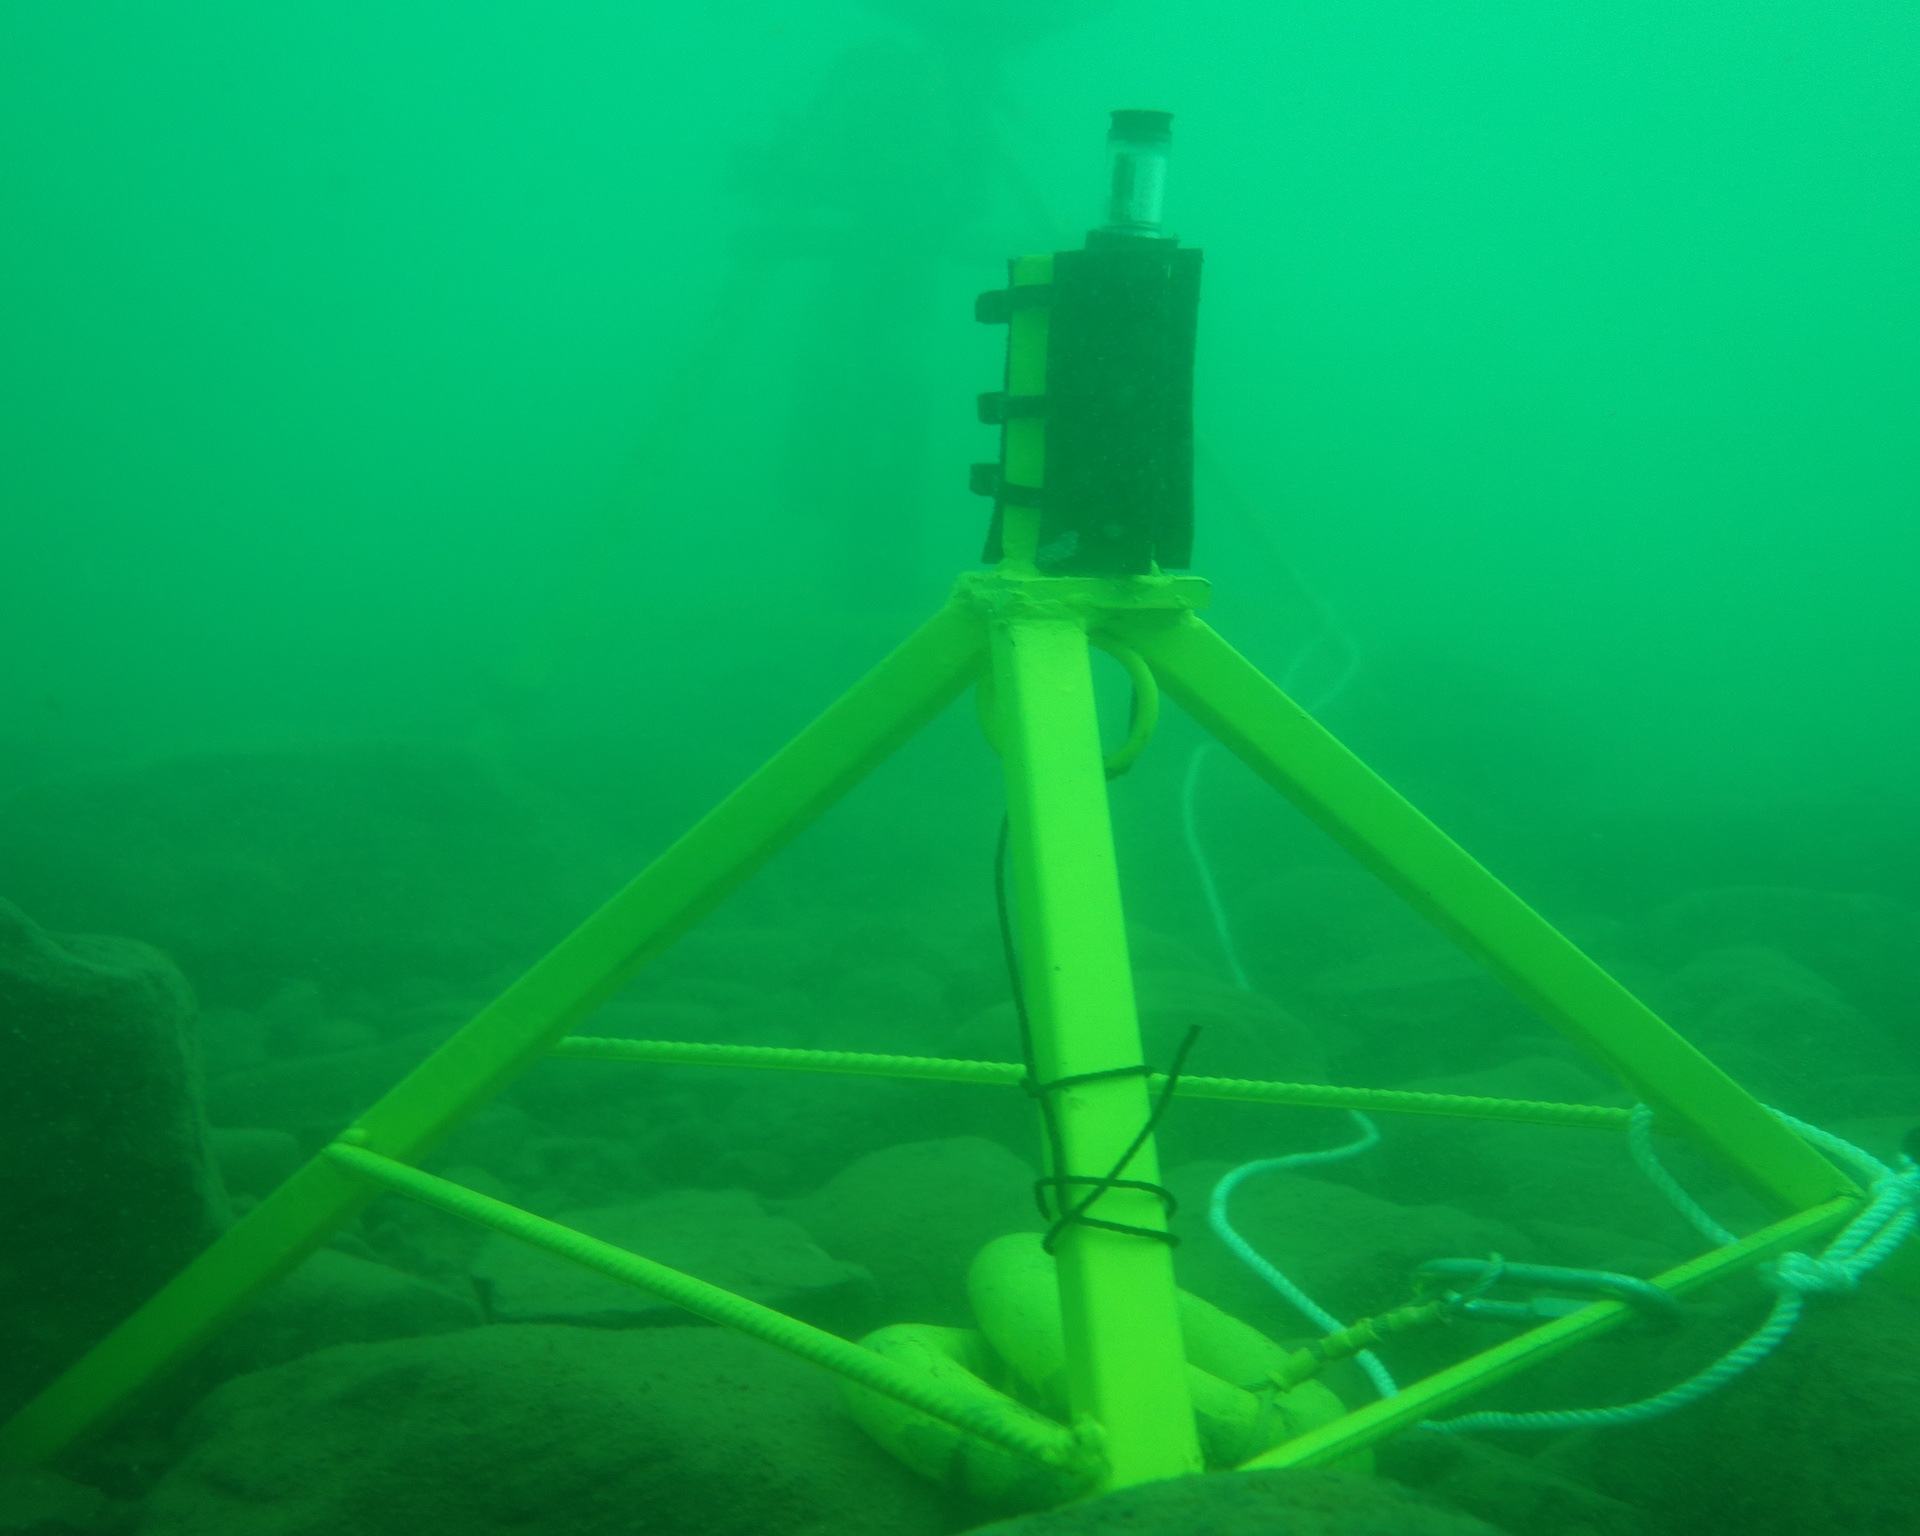 Under-ice light sensor deployment off Sand Island, Lake Superior